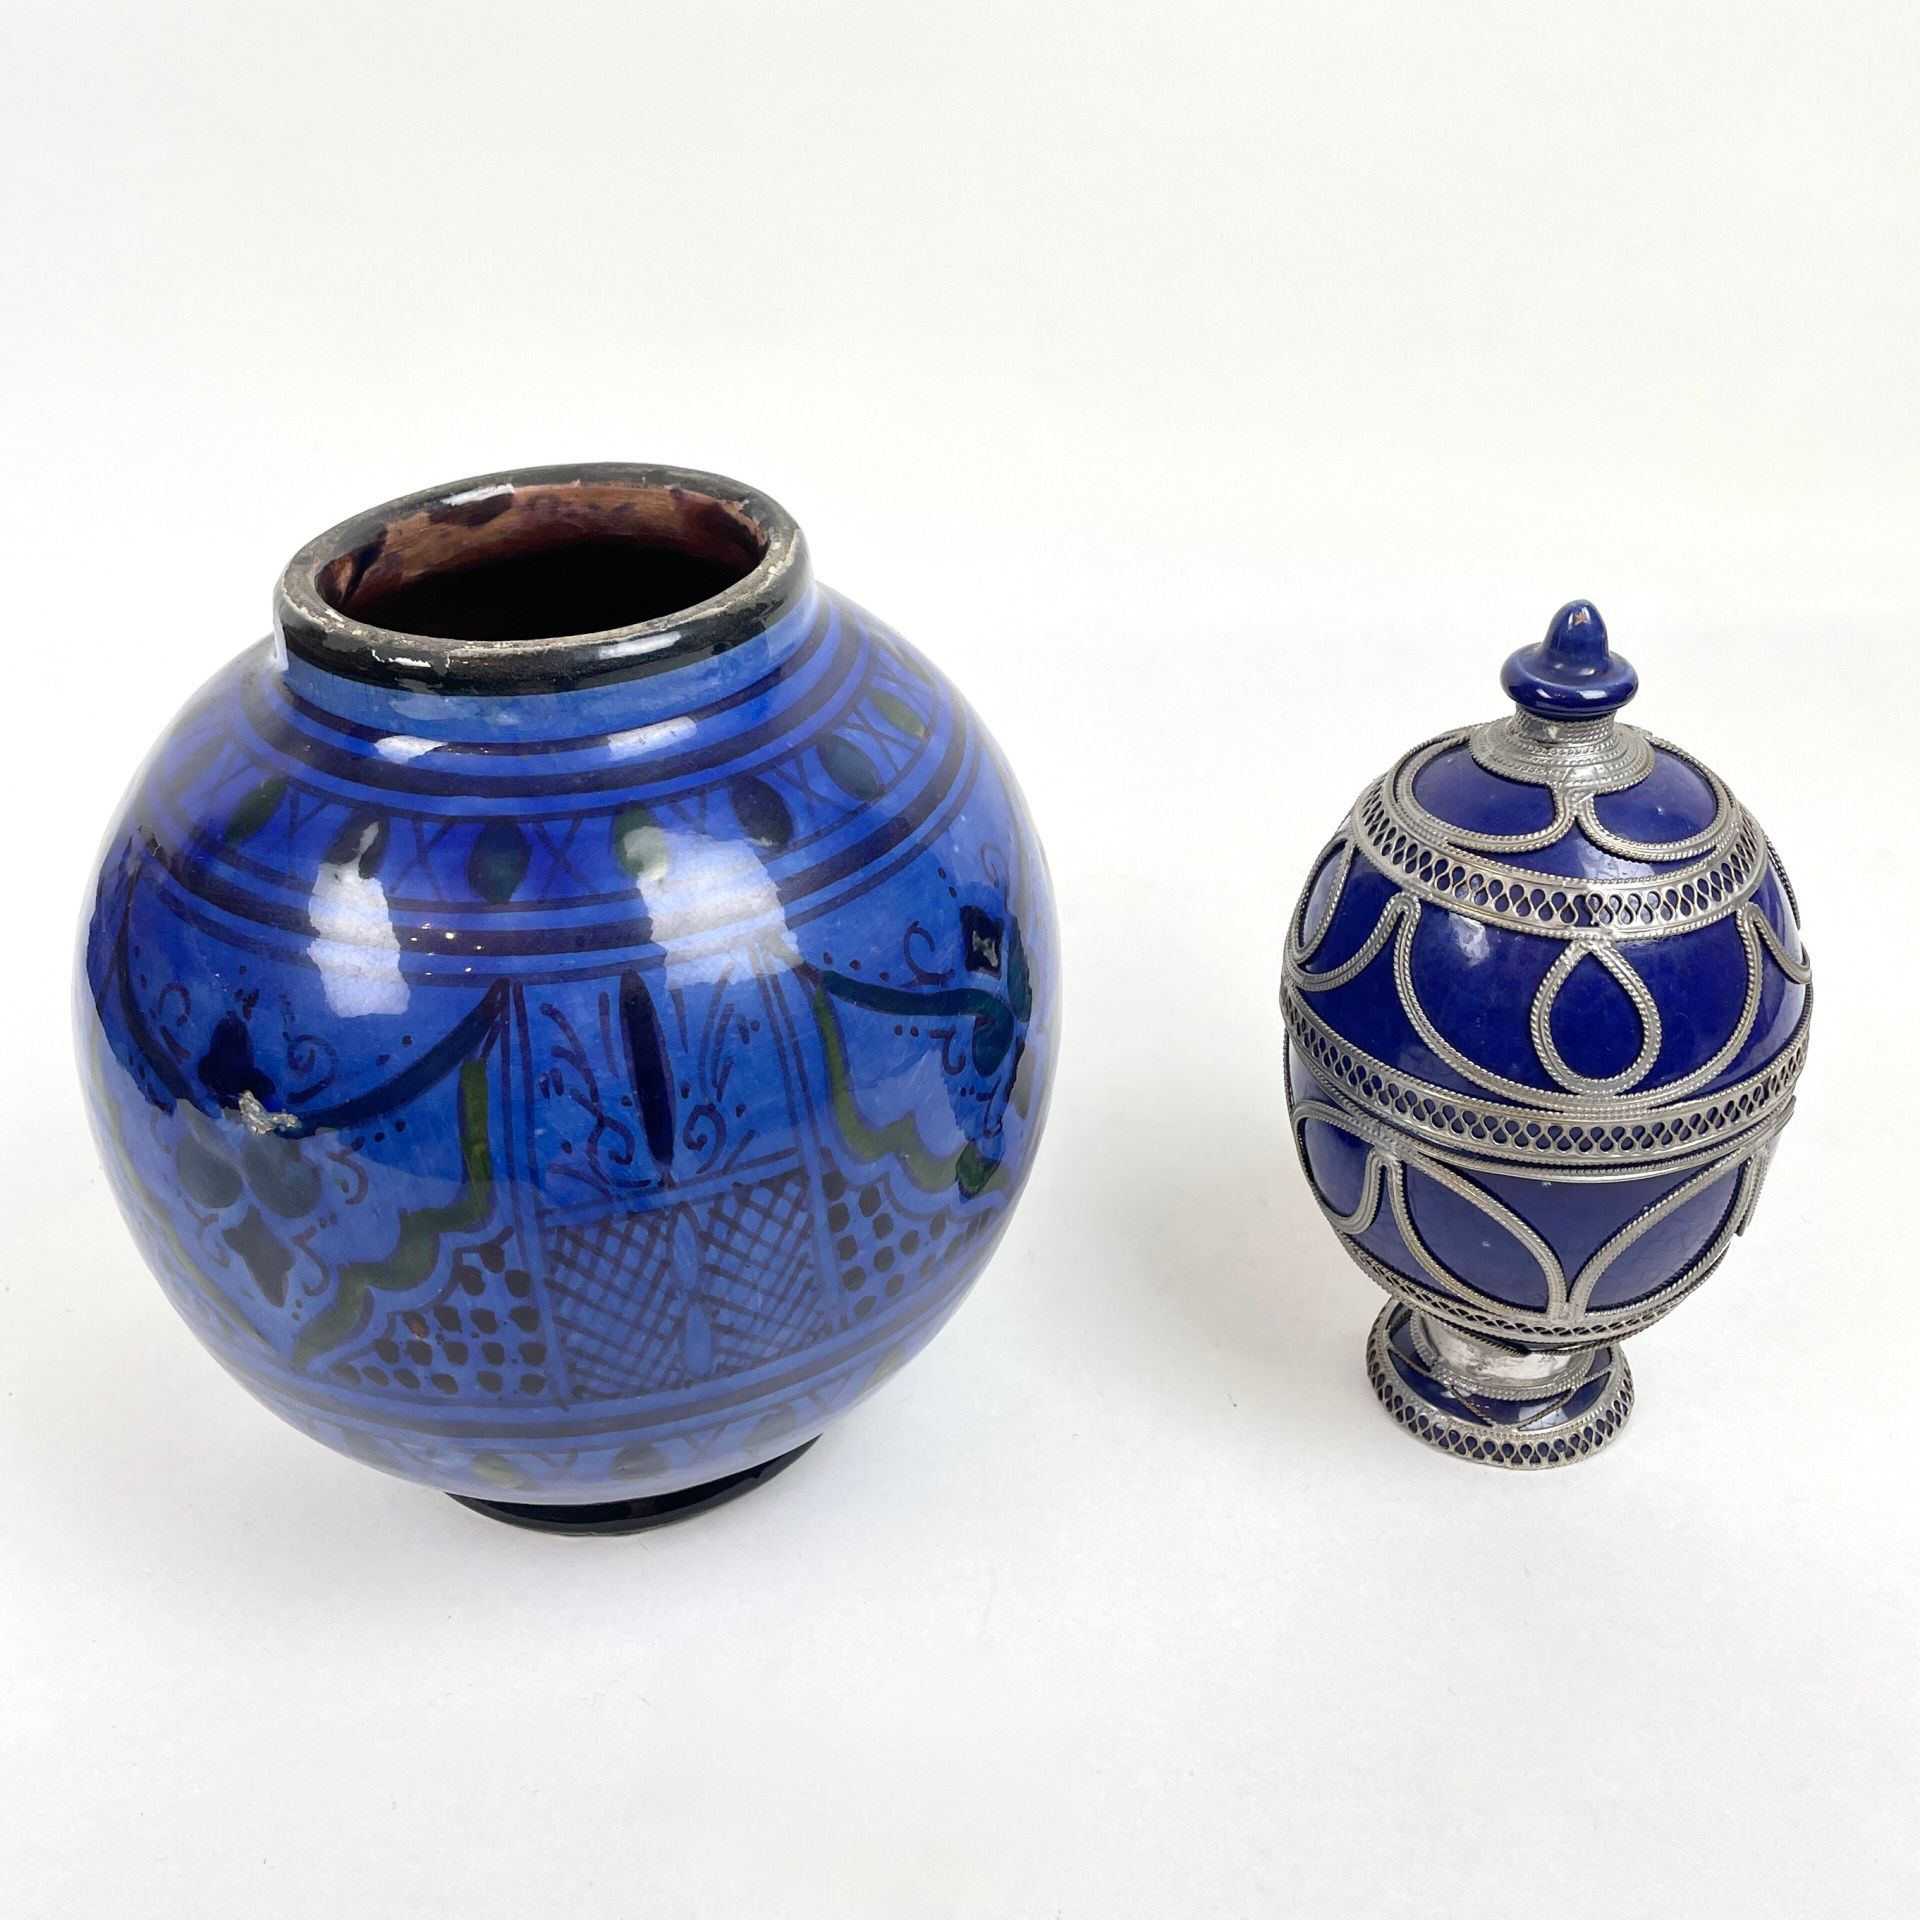 Null 北非 
一套两件蓝釉陶瓷器： 
- 球形花瓶，黑色植物装饰。尺寸：约 20 x 20 厘米 
- 带镂空金属框的蛋形盒子。高度：19.5 厘米。 

&hellip;